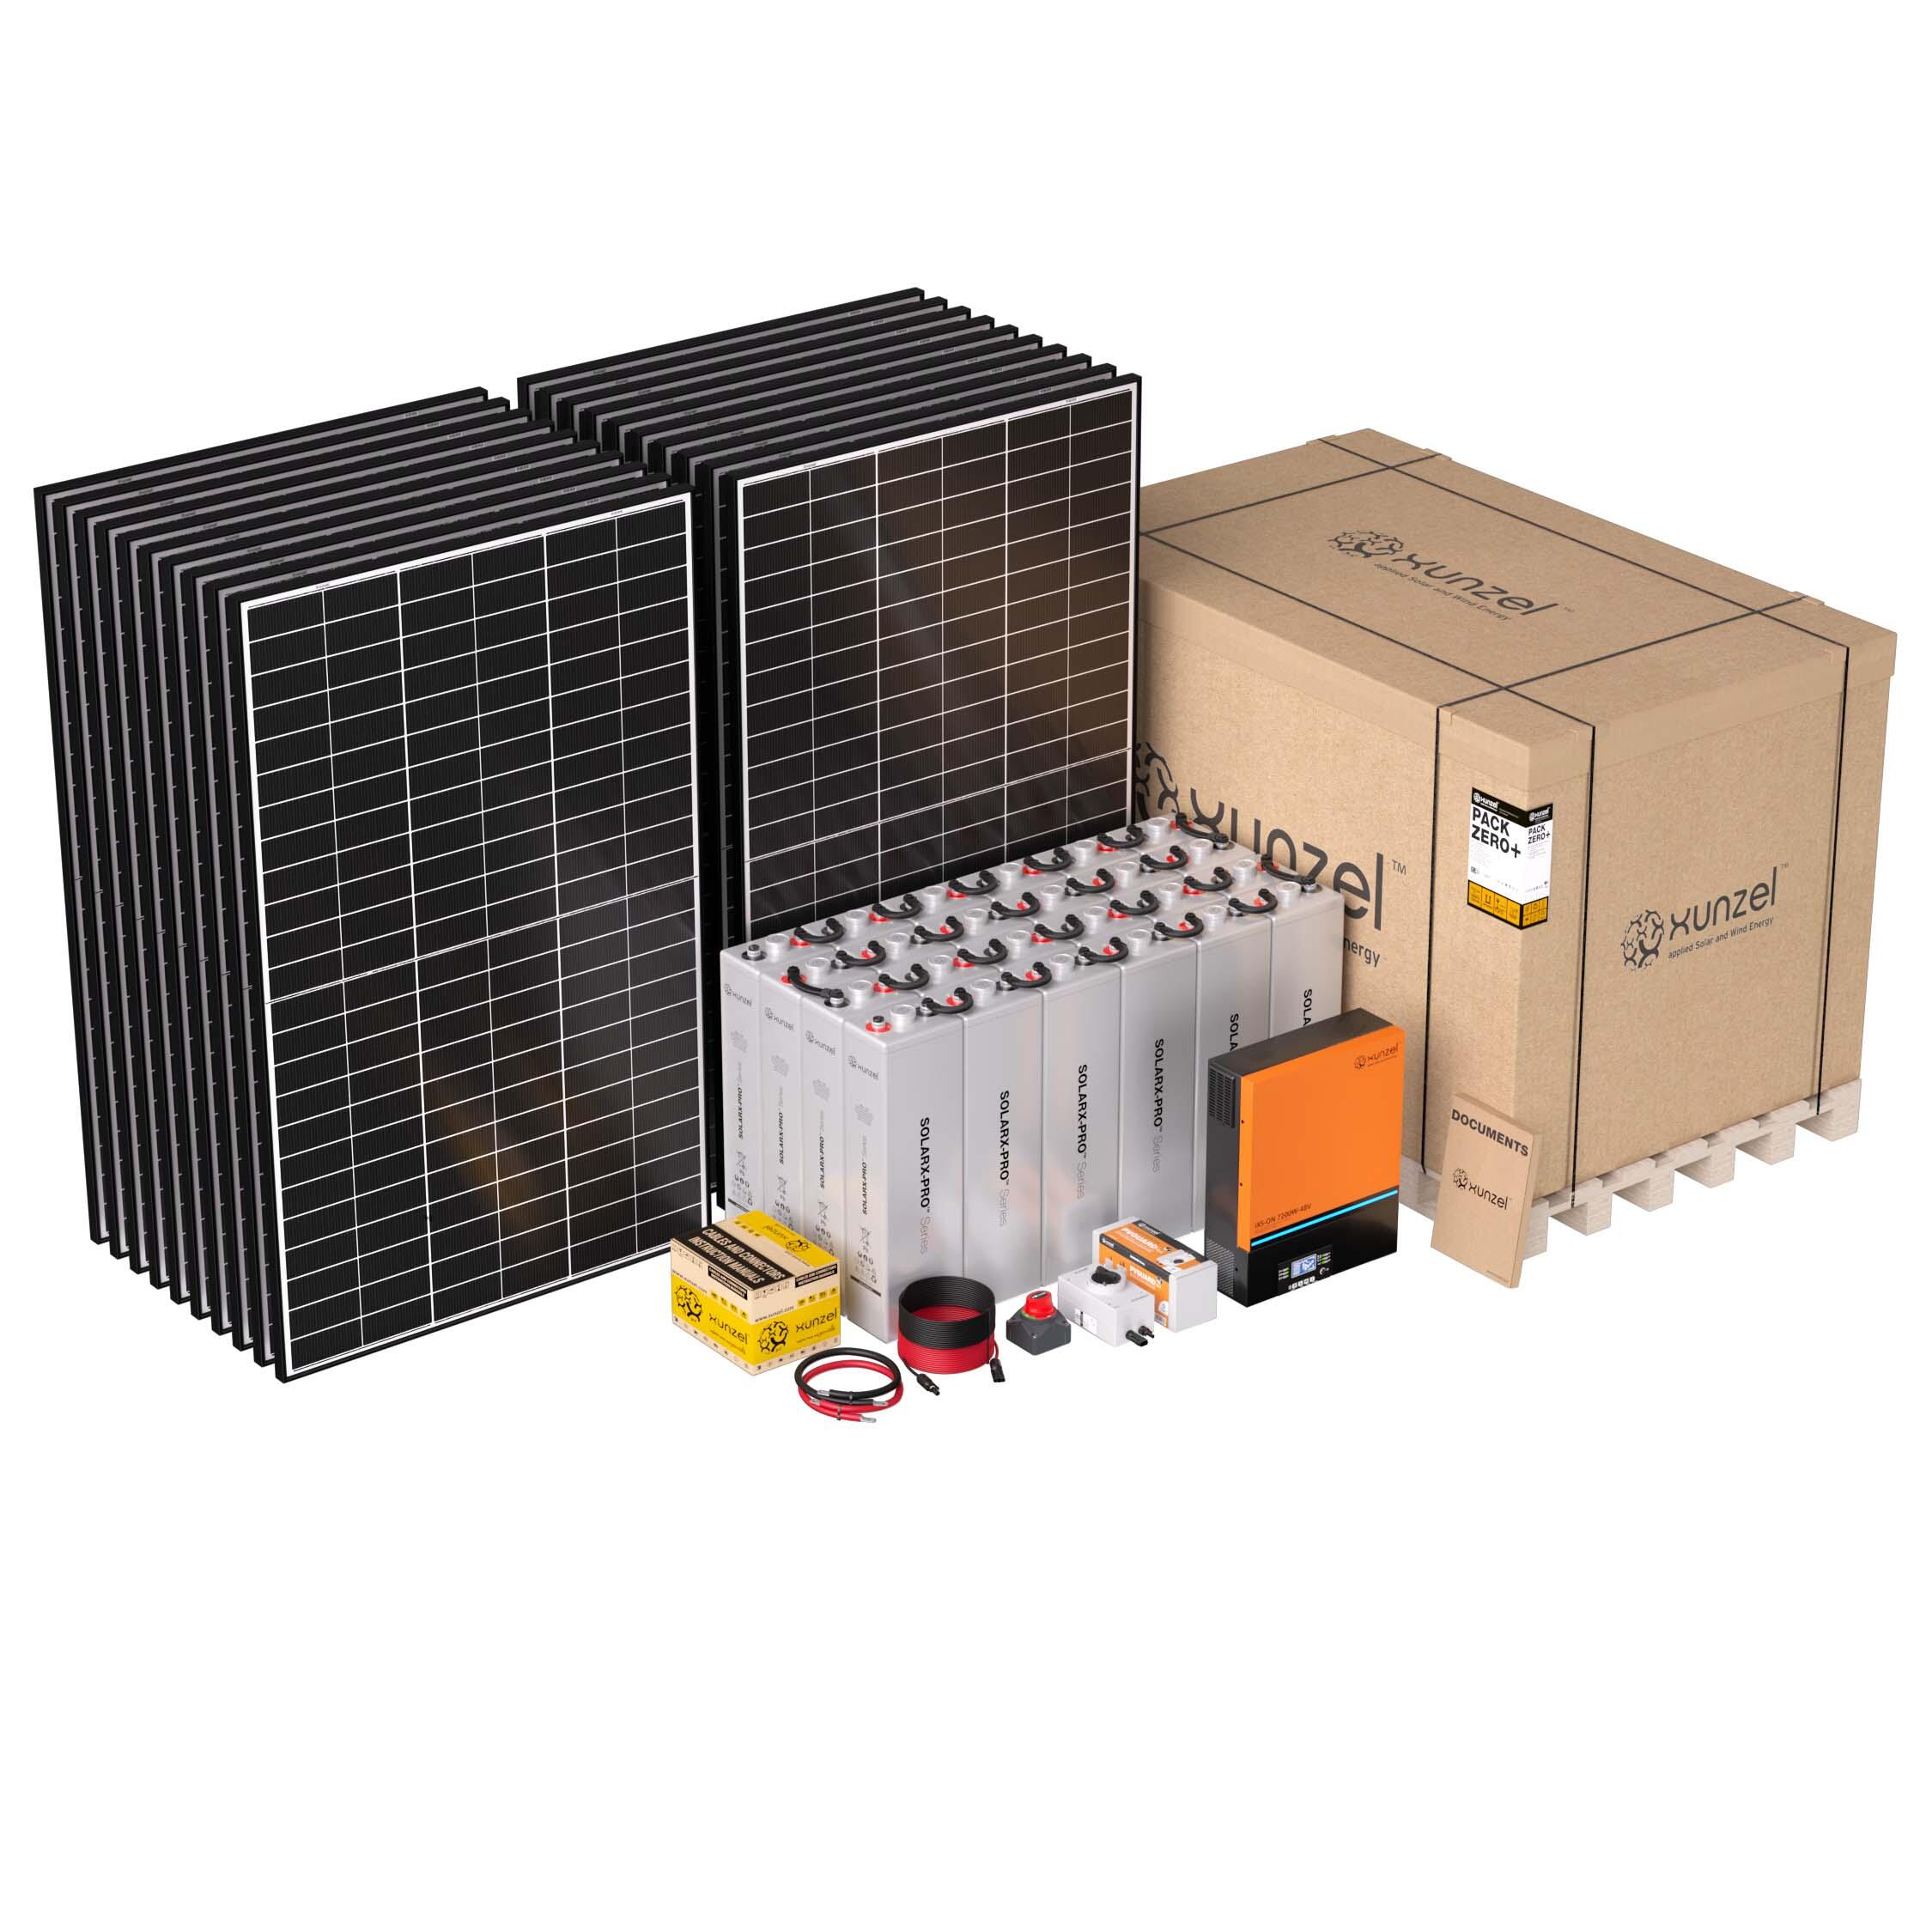 Kit solar pack zero+ xunzel8020pro9 43kwh/d, batería 47kwh, inversor 7,2kw